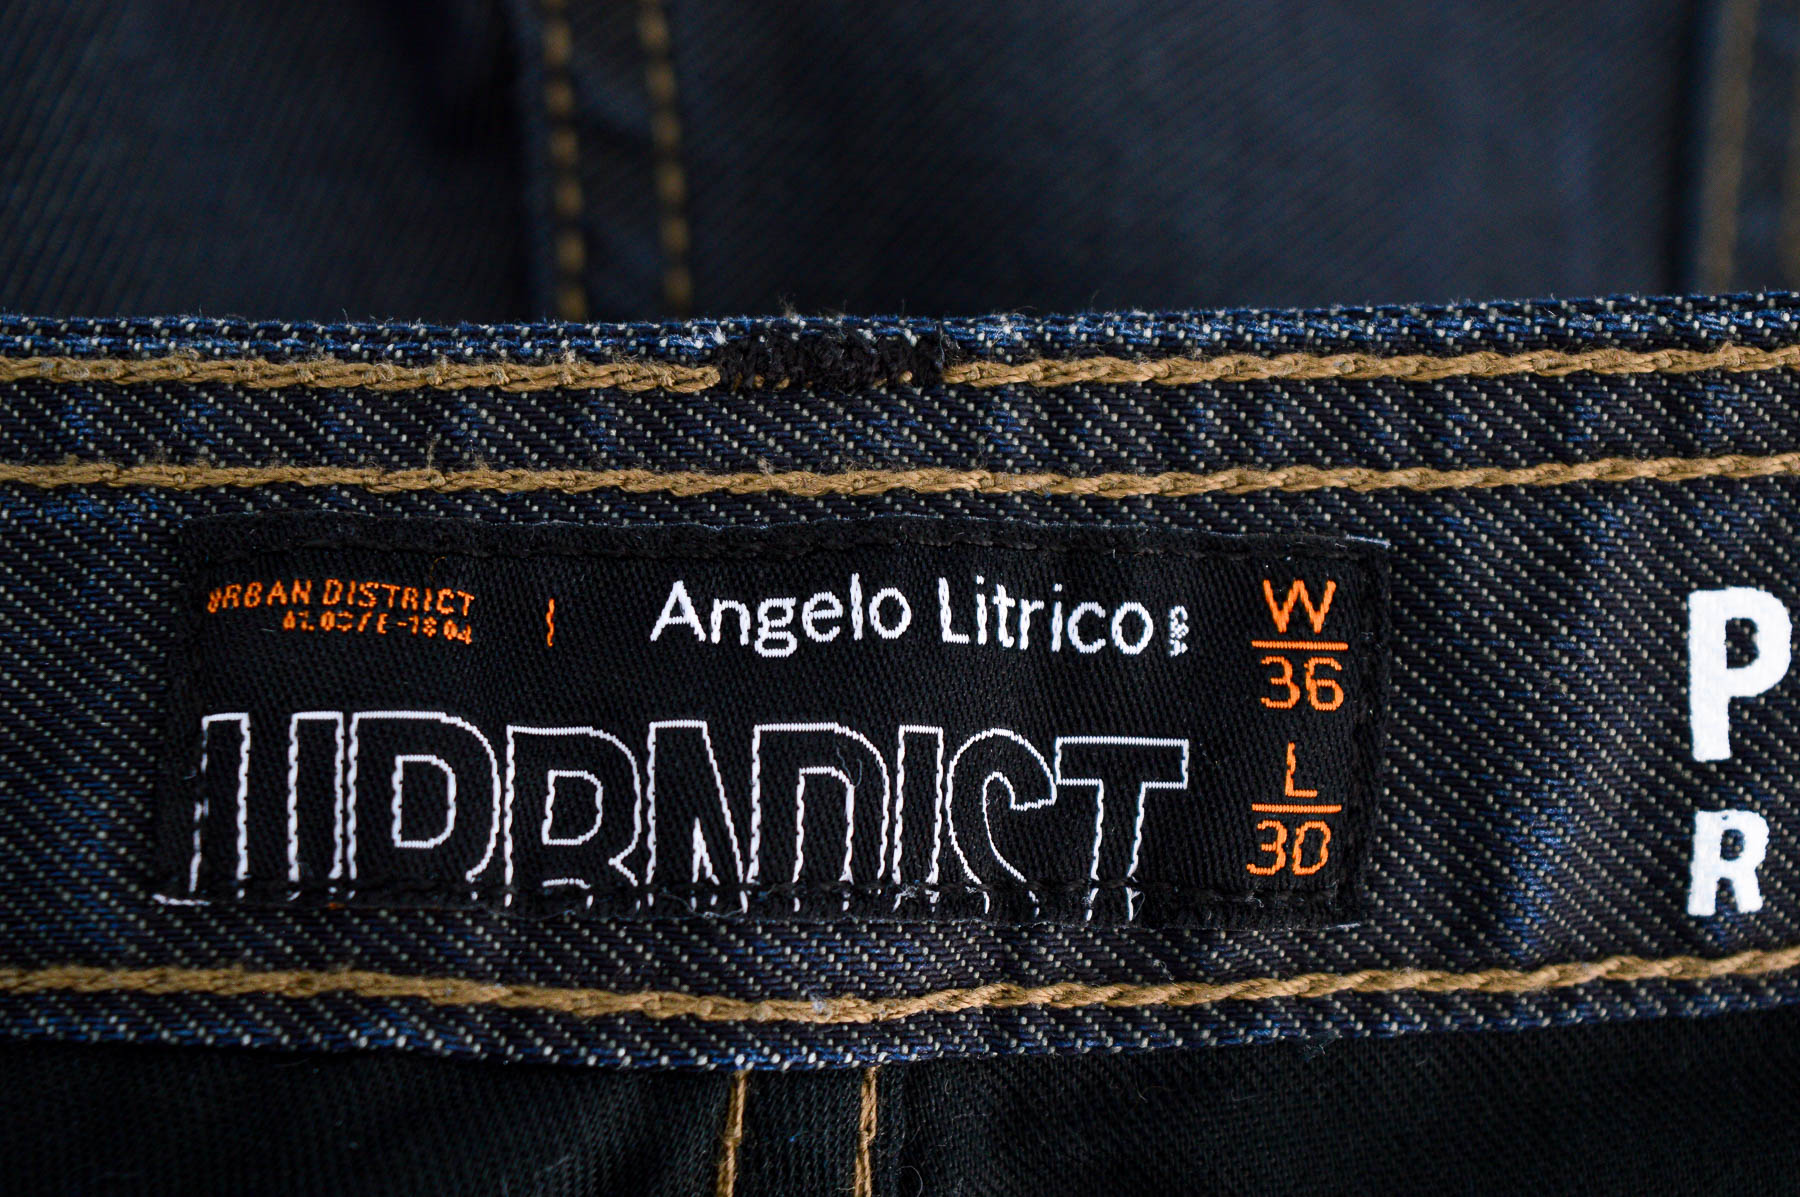 Men's jeans - Angelo Litrico - 2